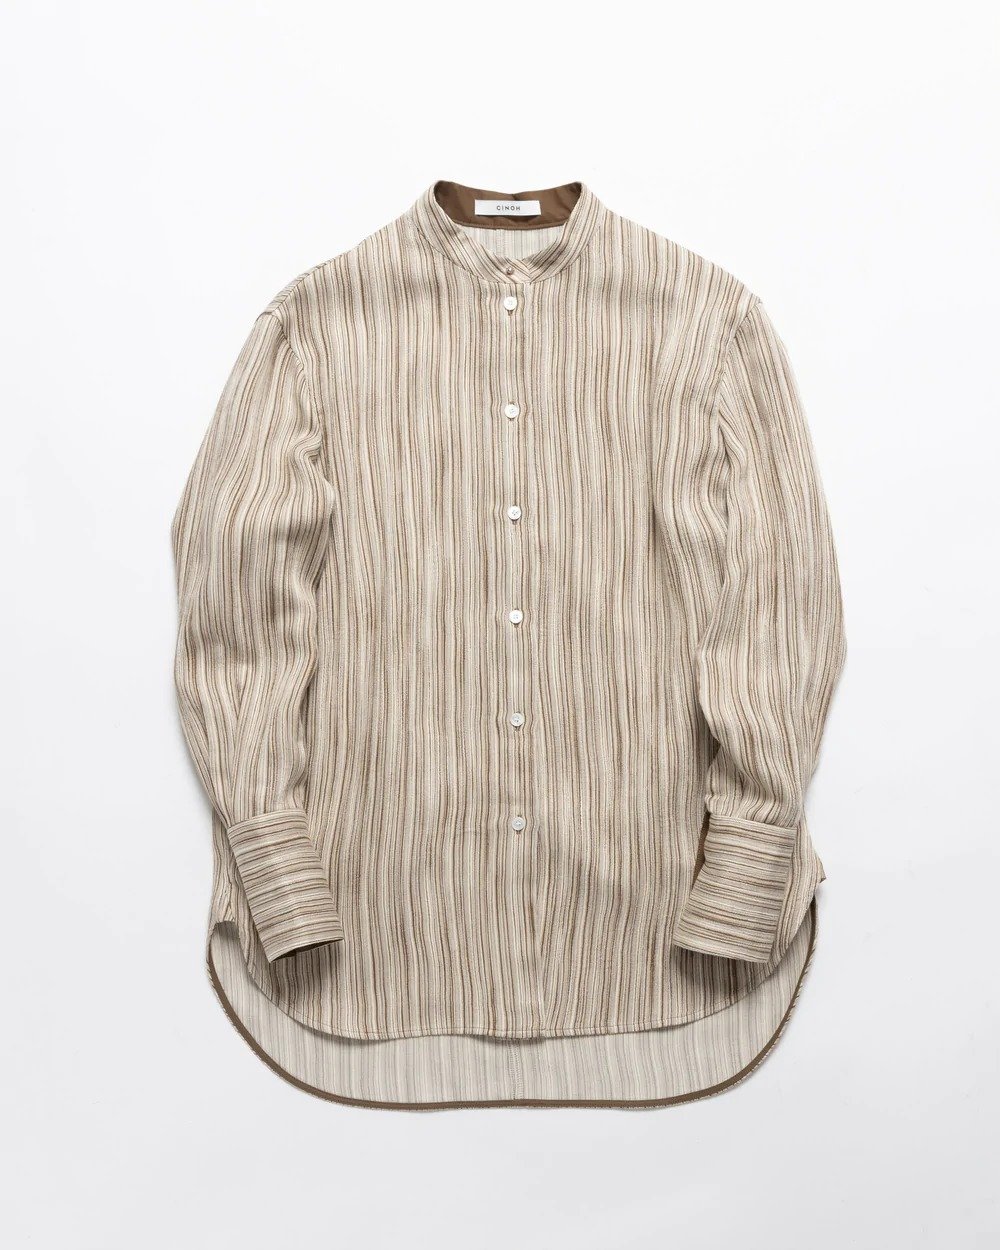 【CINOH】ストライプスタンドカラーシャツ（3万7620円、40%OFF）